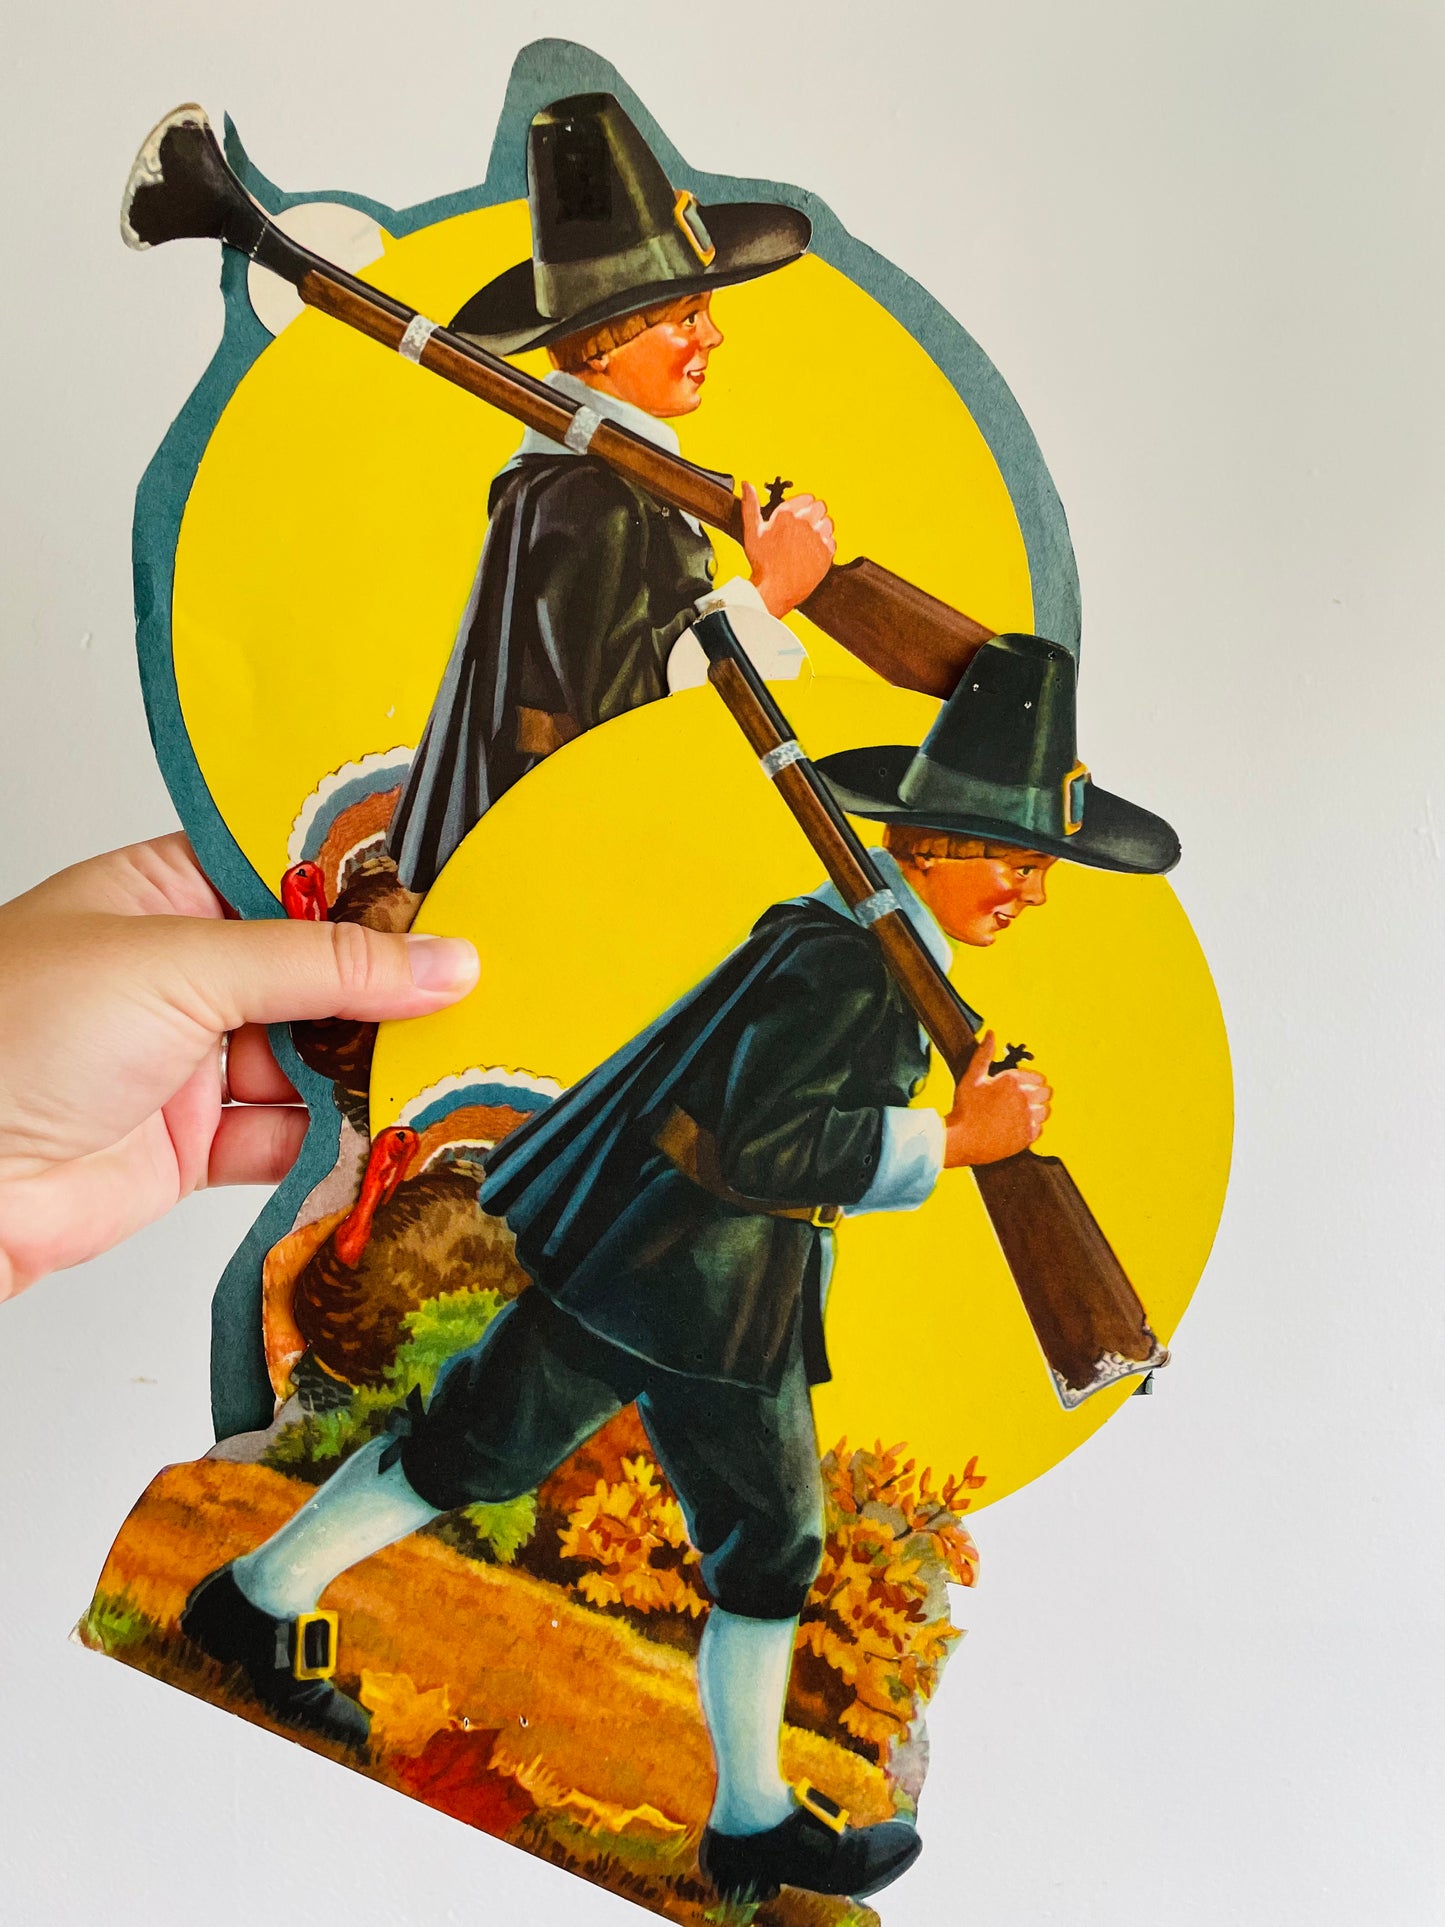 Vintage Thanksgiving Cardboard Cutouts - Pilgrim Boys - Set of 2